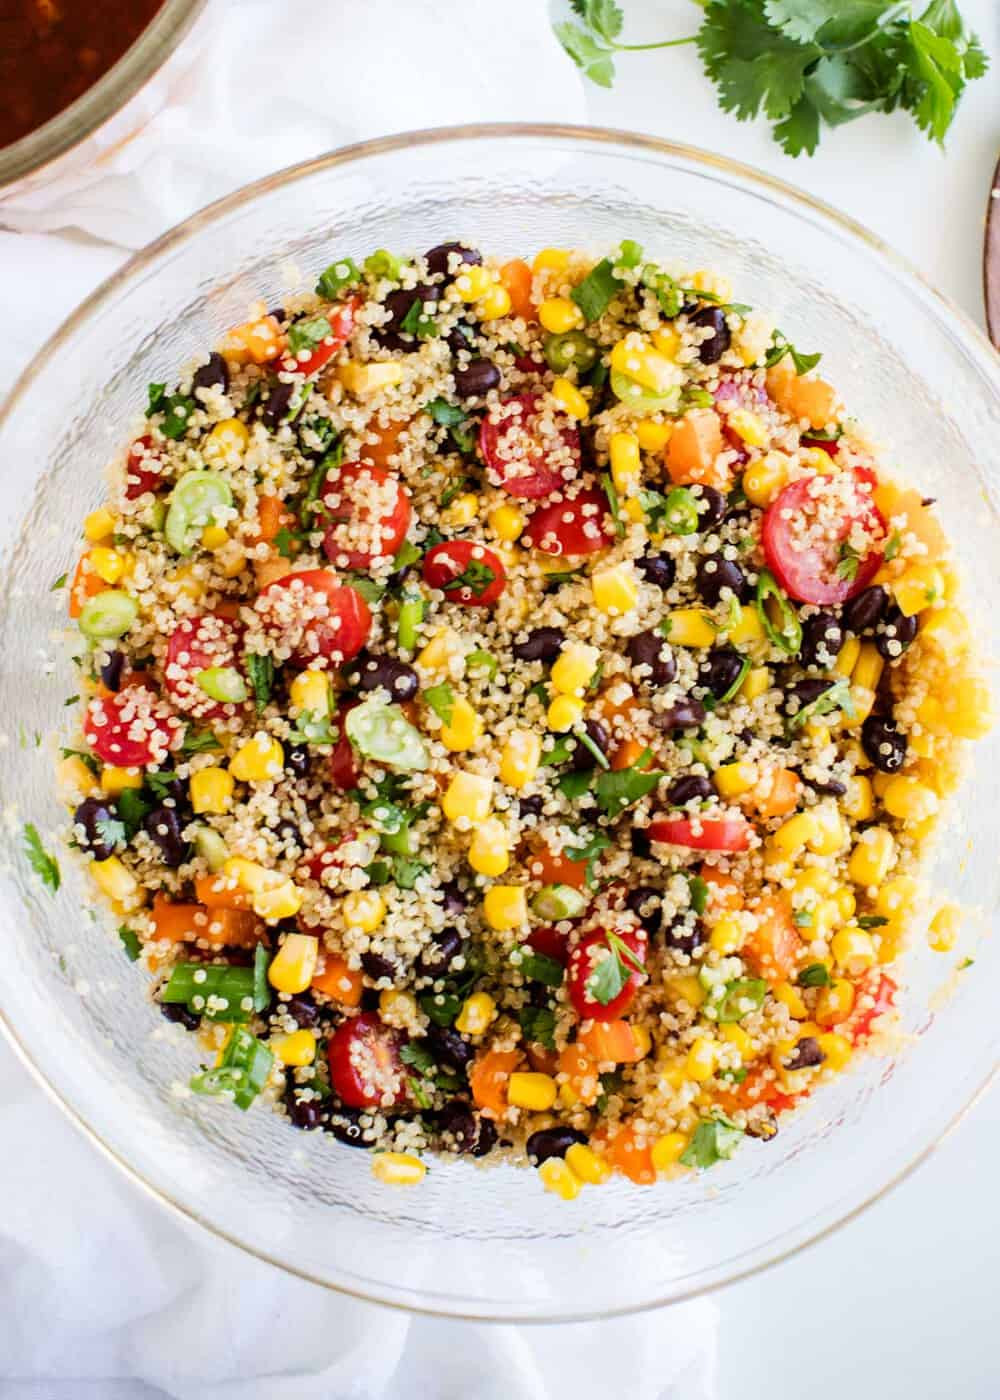 Quinoa Recipes Side Dishes
 EASY Southwest Quinoa Salad 30 minutes I Heart Naptime